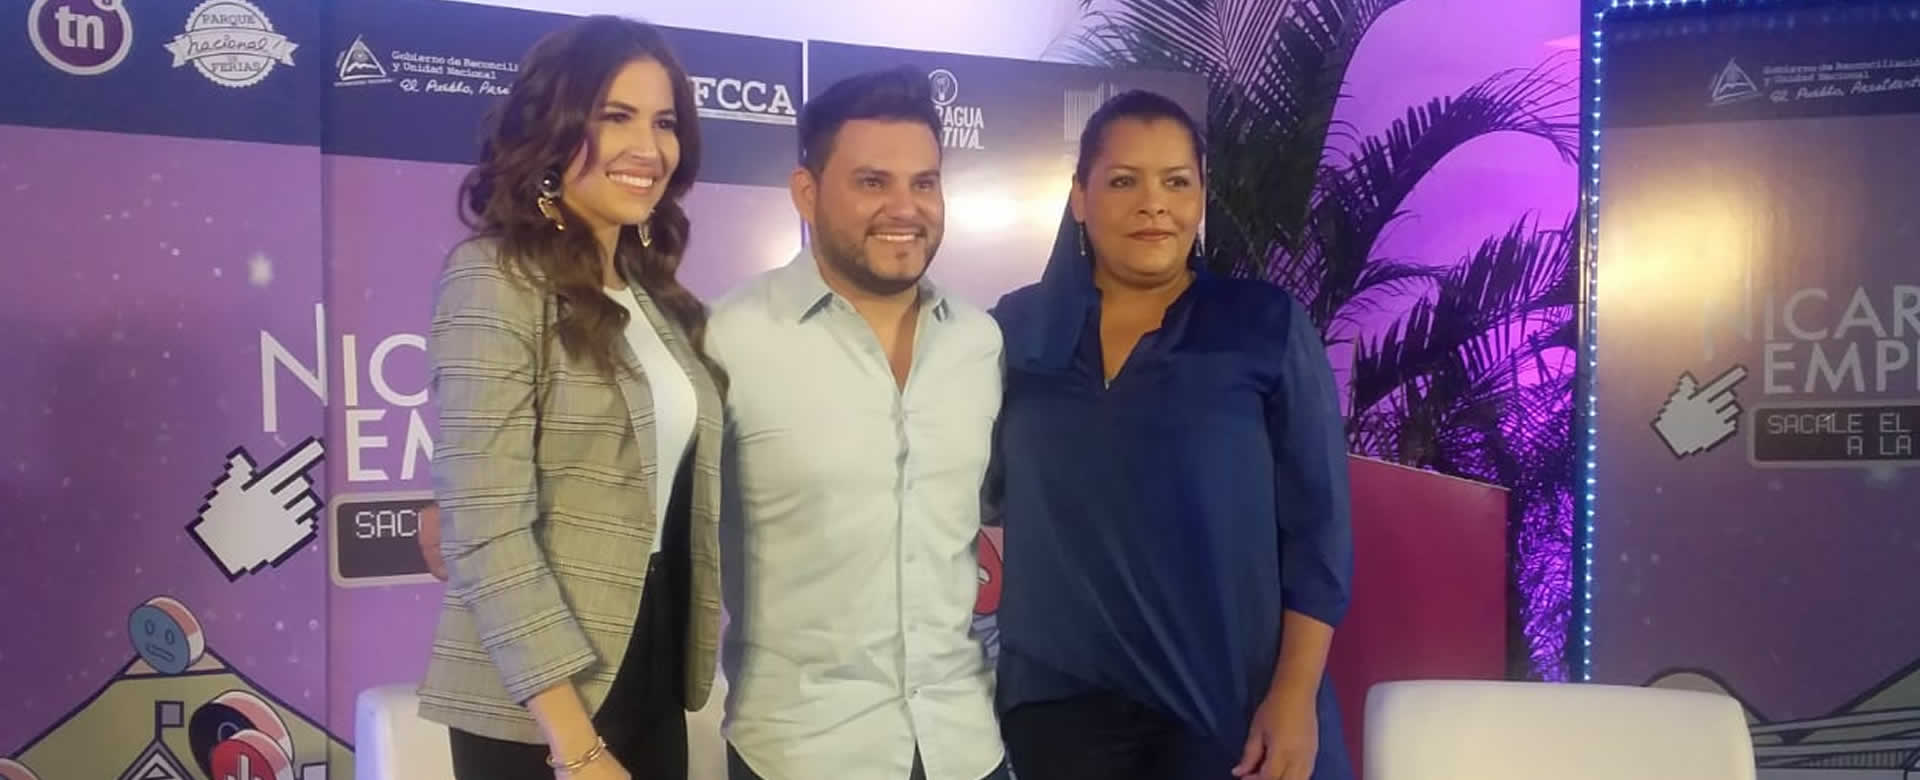 Nicaragua Emprende 2019 lanza su segunda convocatoria a participantes